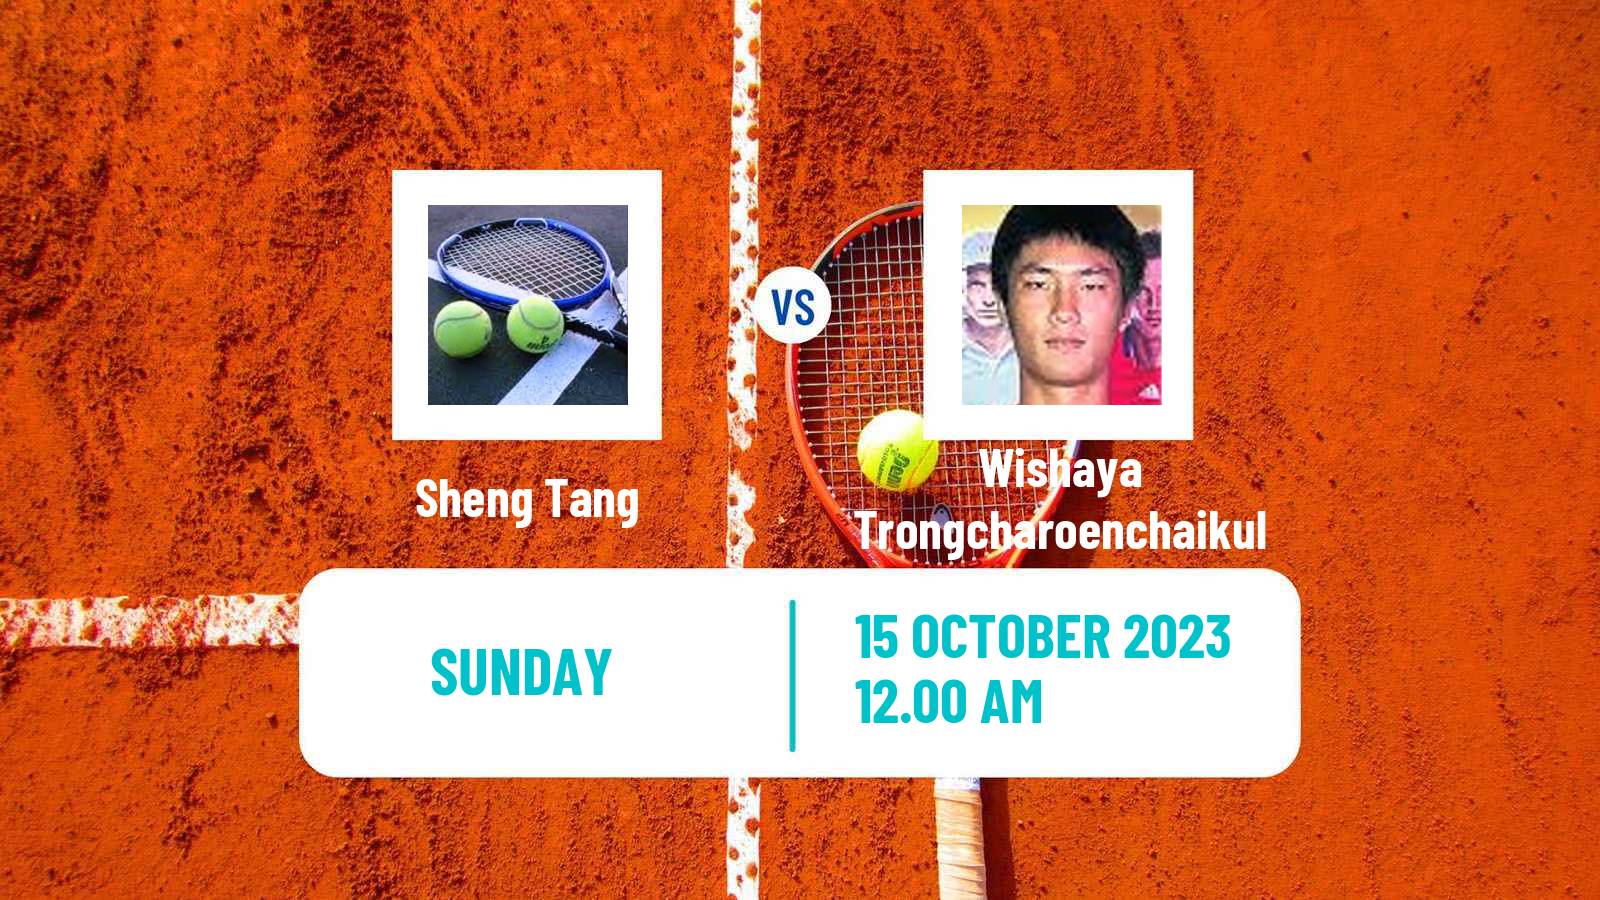 Tennis Shenzhen 3 Challenger Men Sheng Tang - Wishaya Trongcharoenchaikul